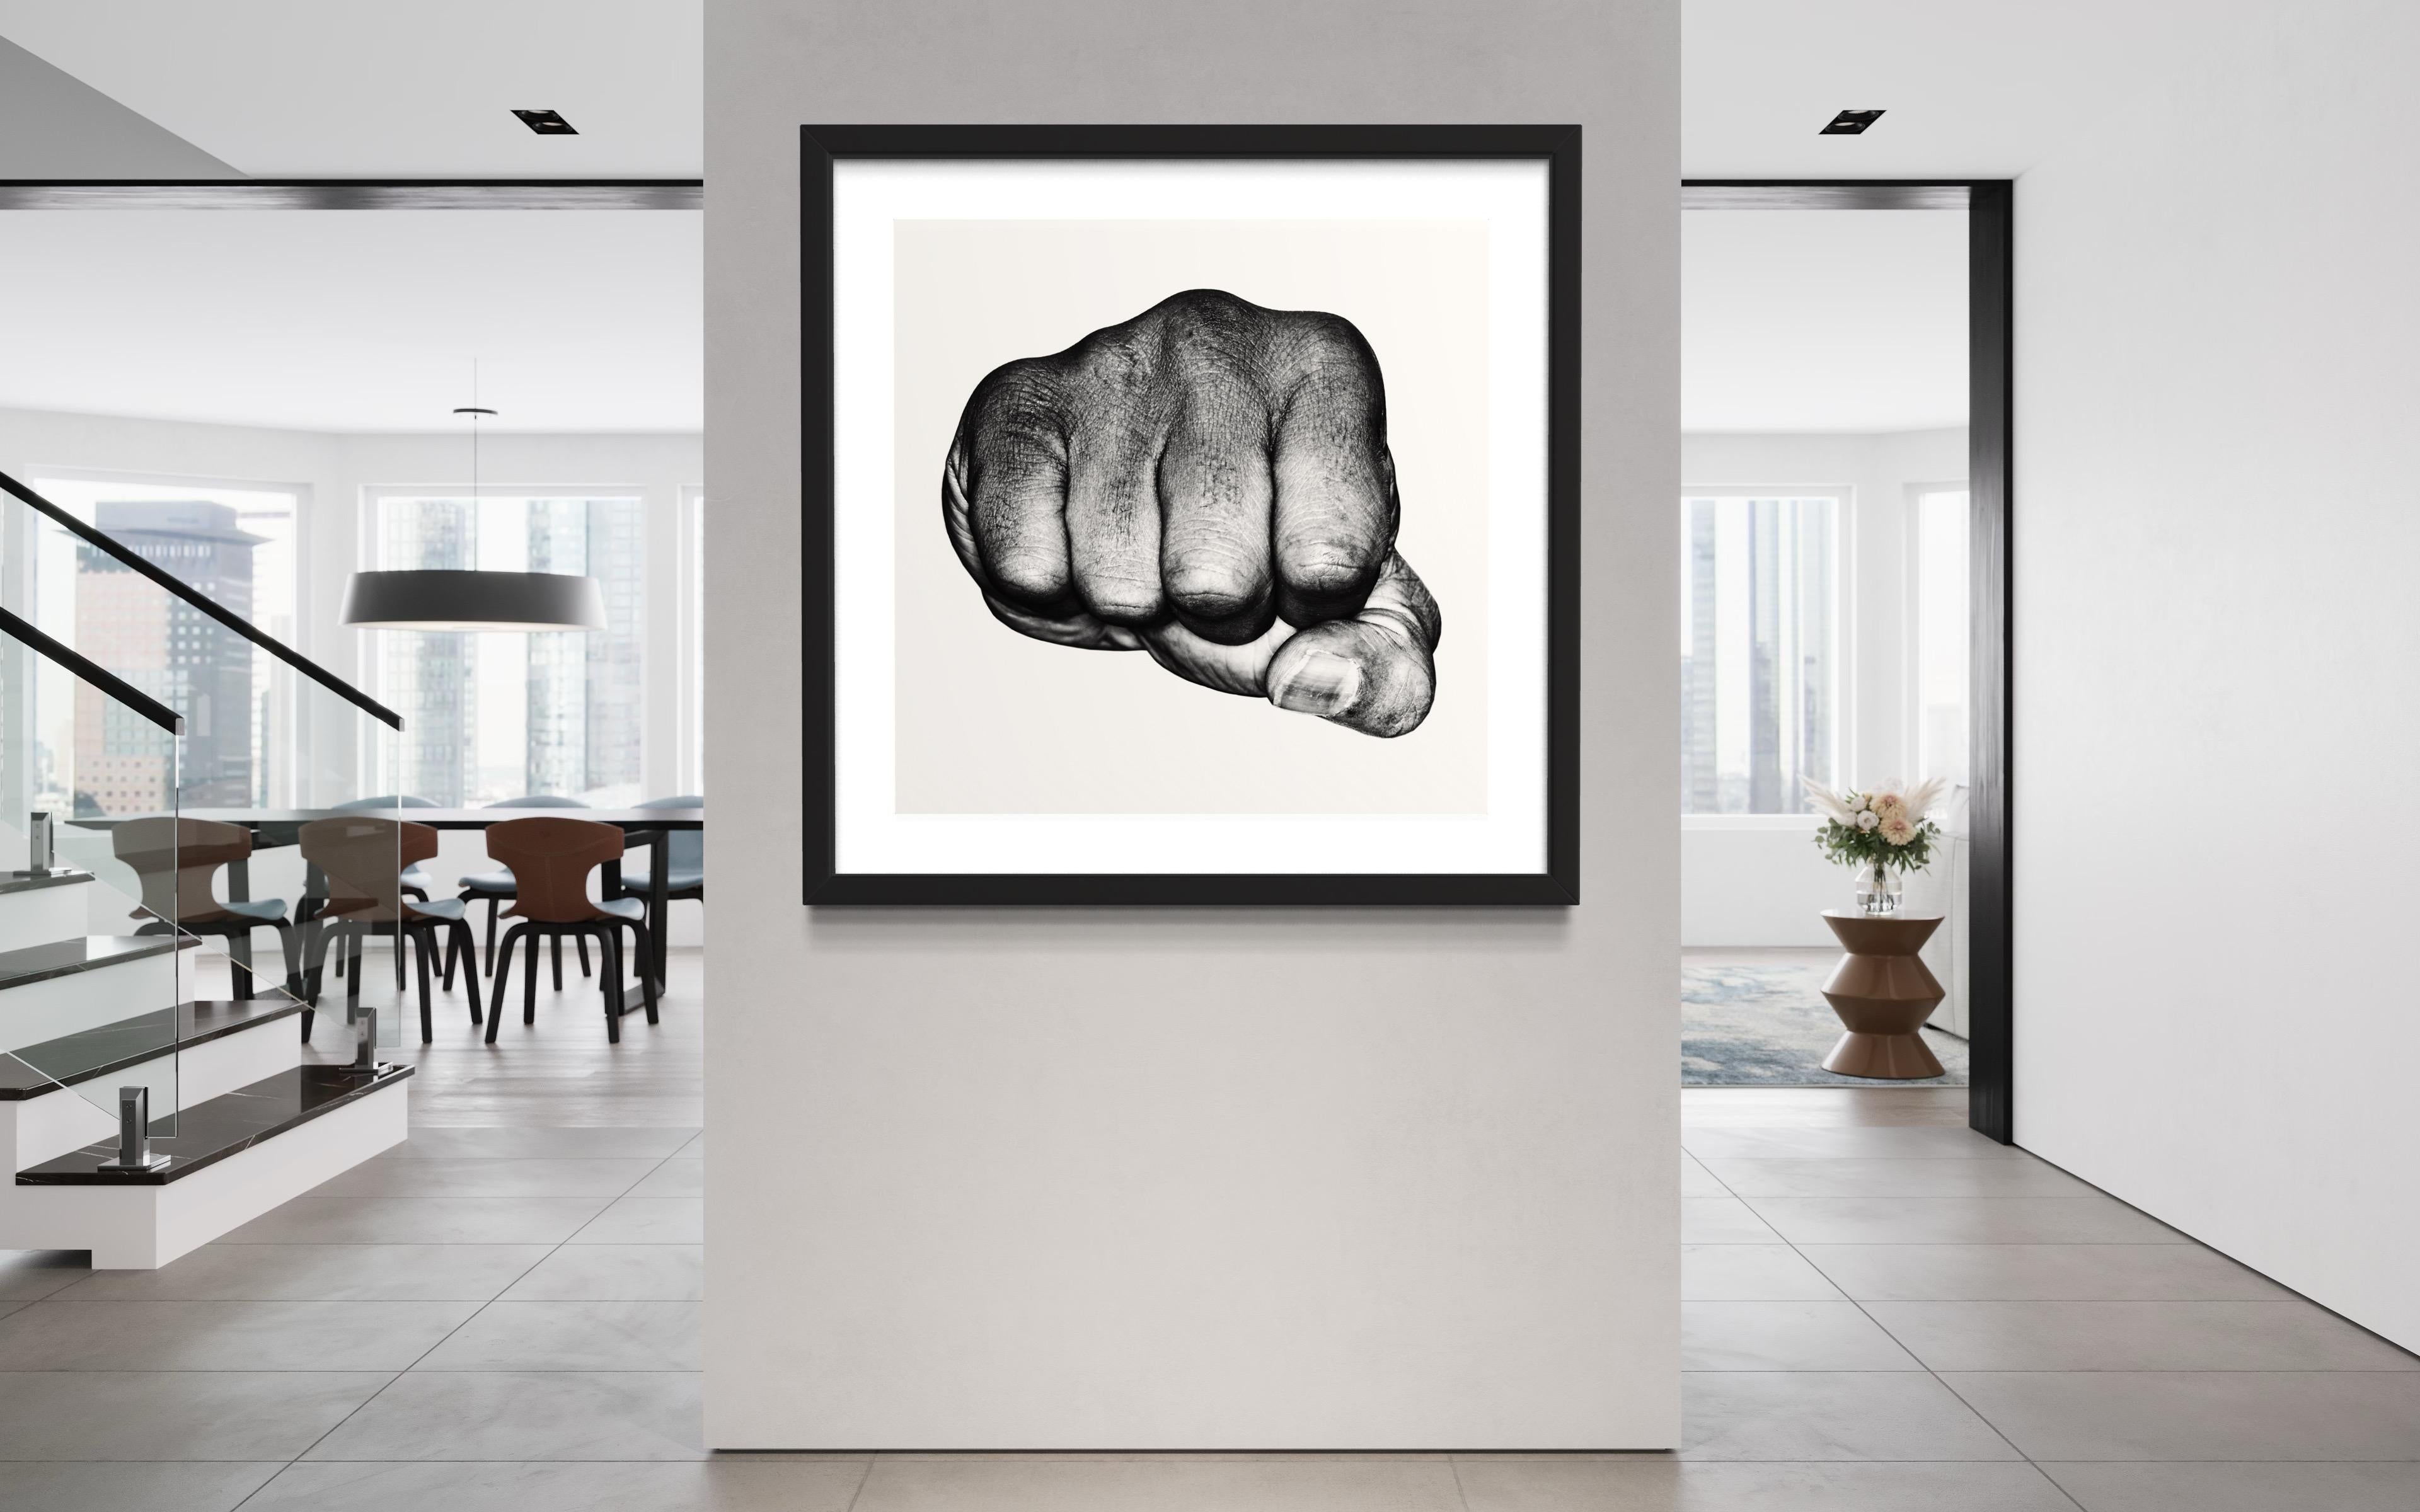 Mike Tyson's Fist - Photograph by Scott McDermott